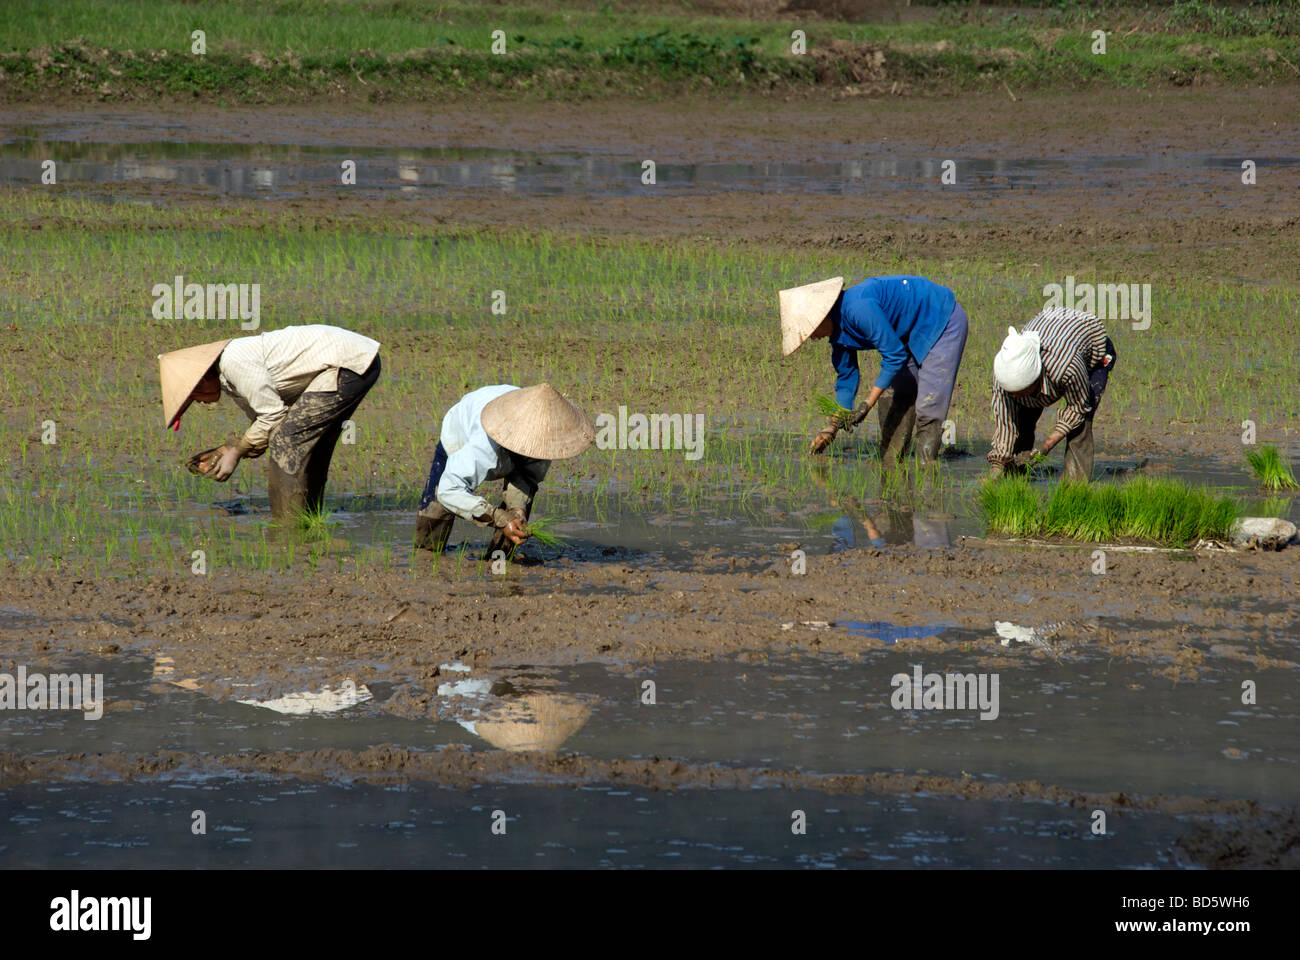 Four people planting rice Tam Coc Ninh Binh Province Northern Vietnam Stock Photo